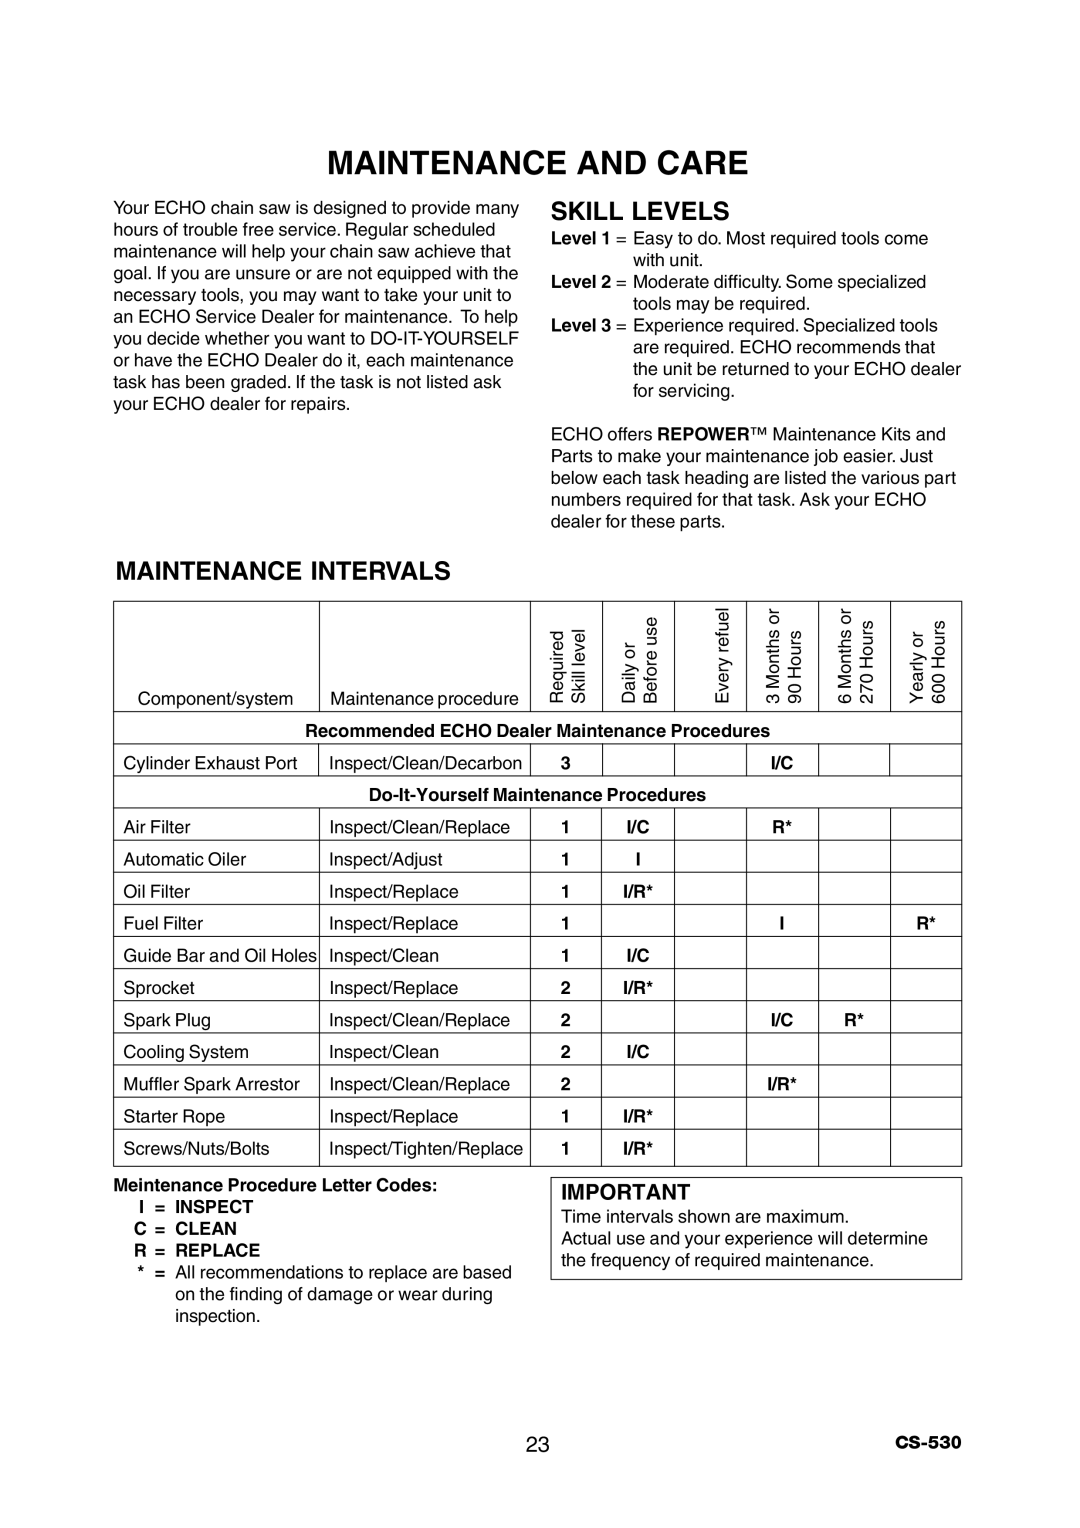 Echo CS-530 instruction manual Maintenance And Care, Skill Levels, Maintenance Intervals 